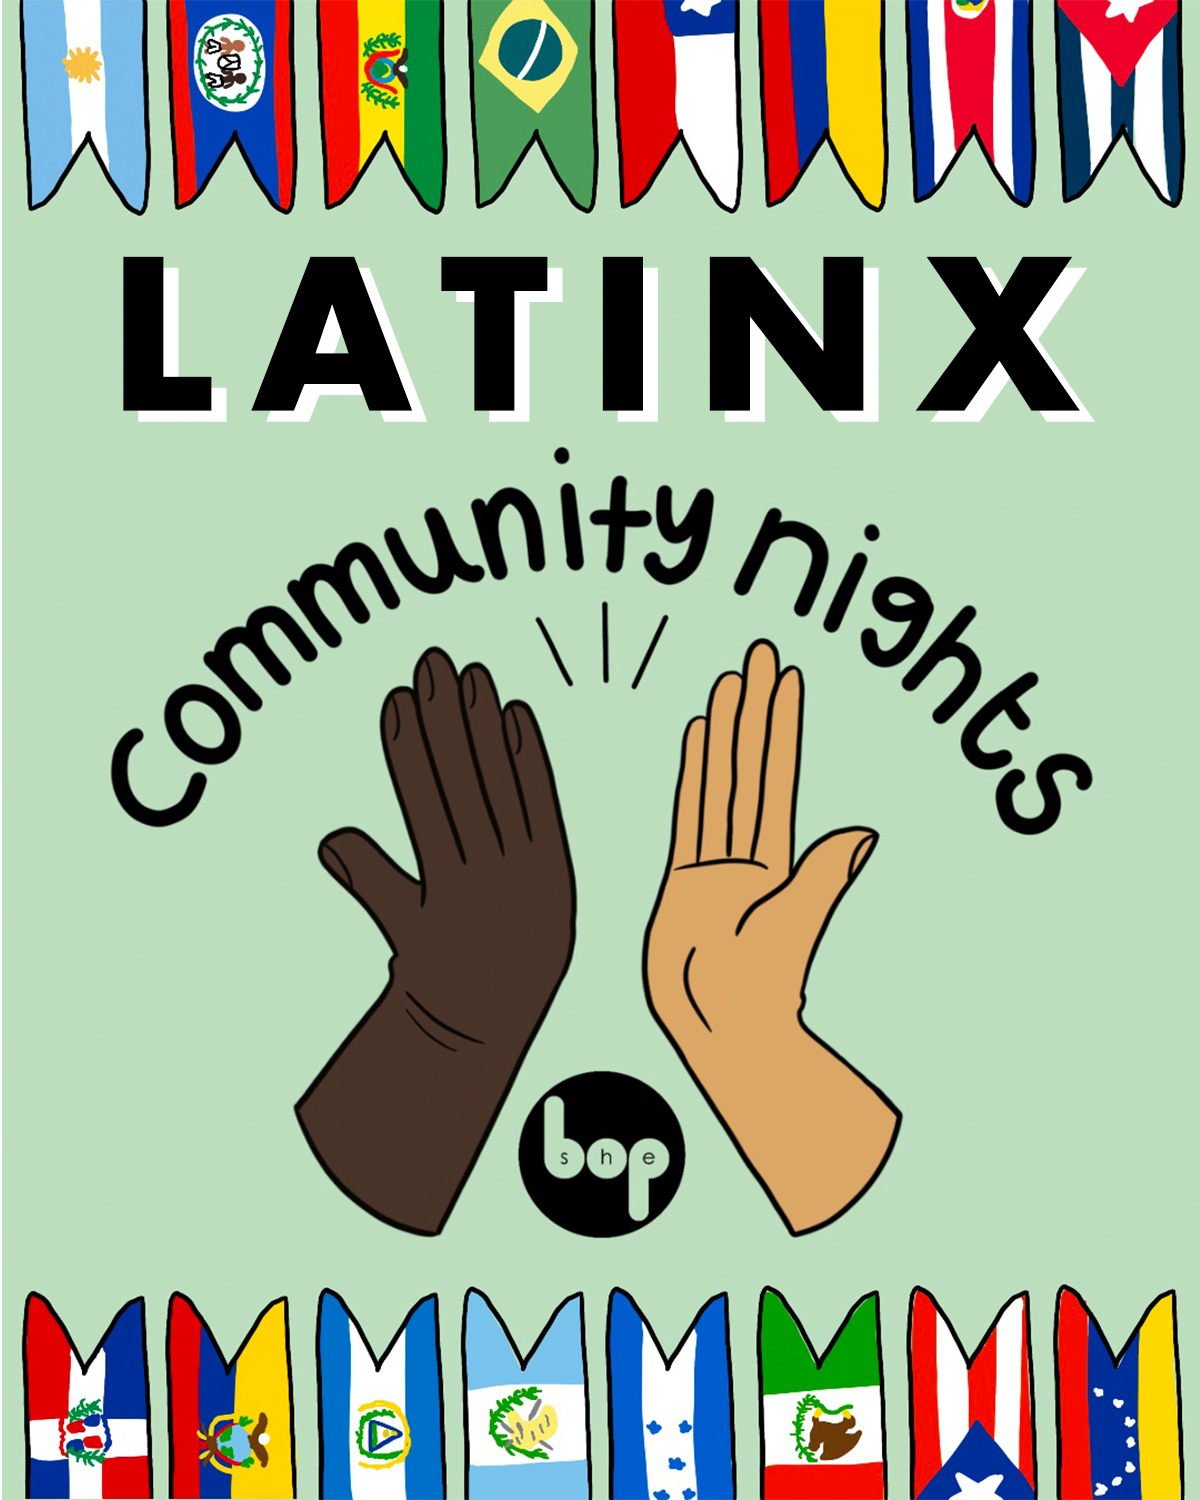 Latinx Community Night!